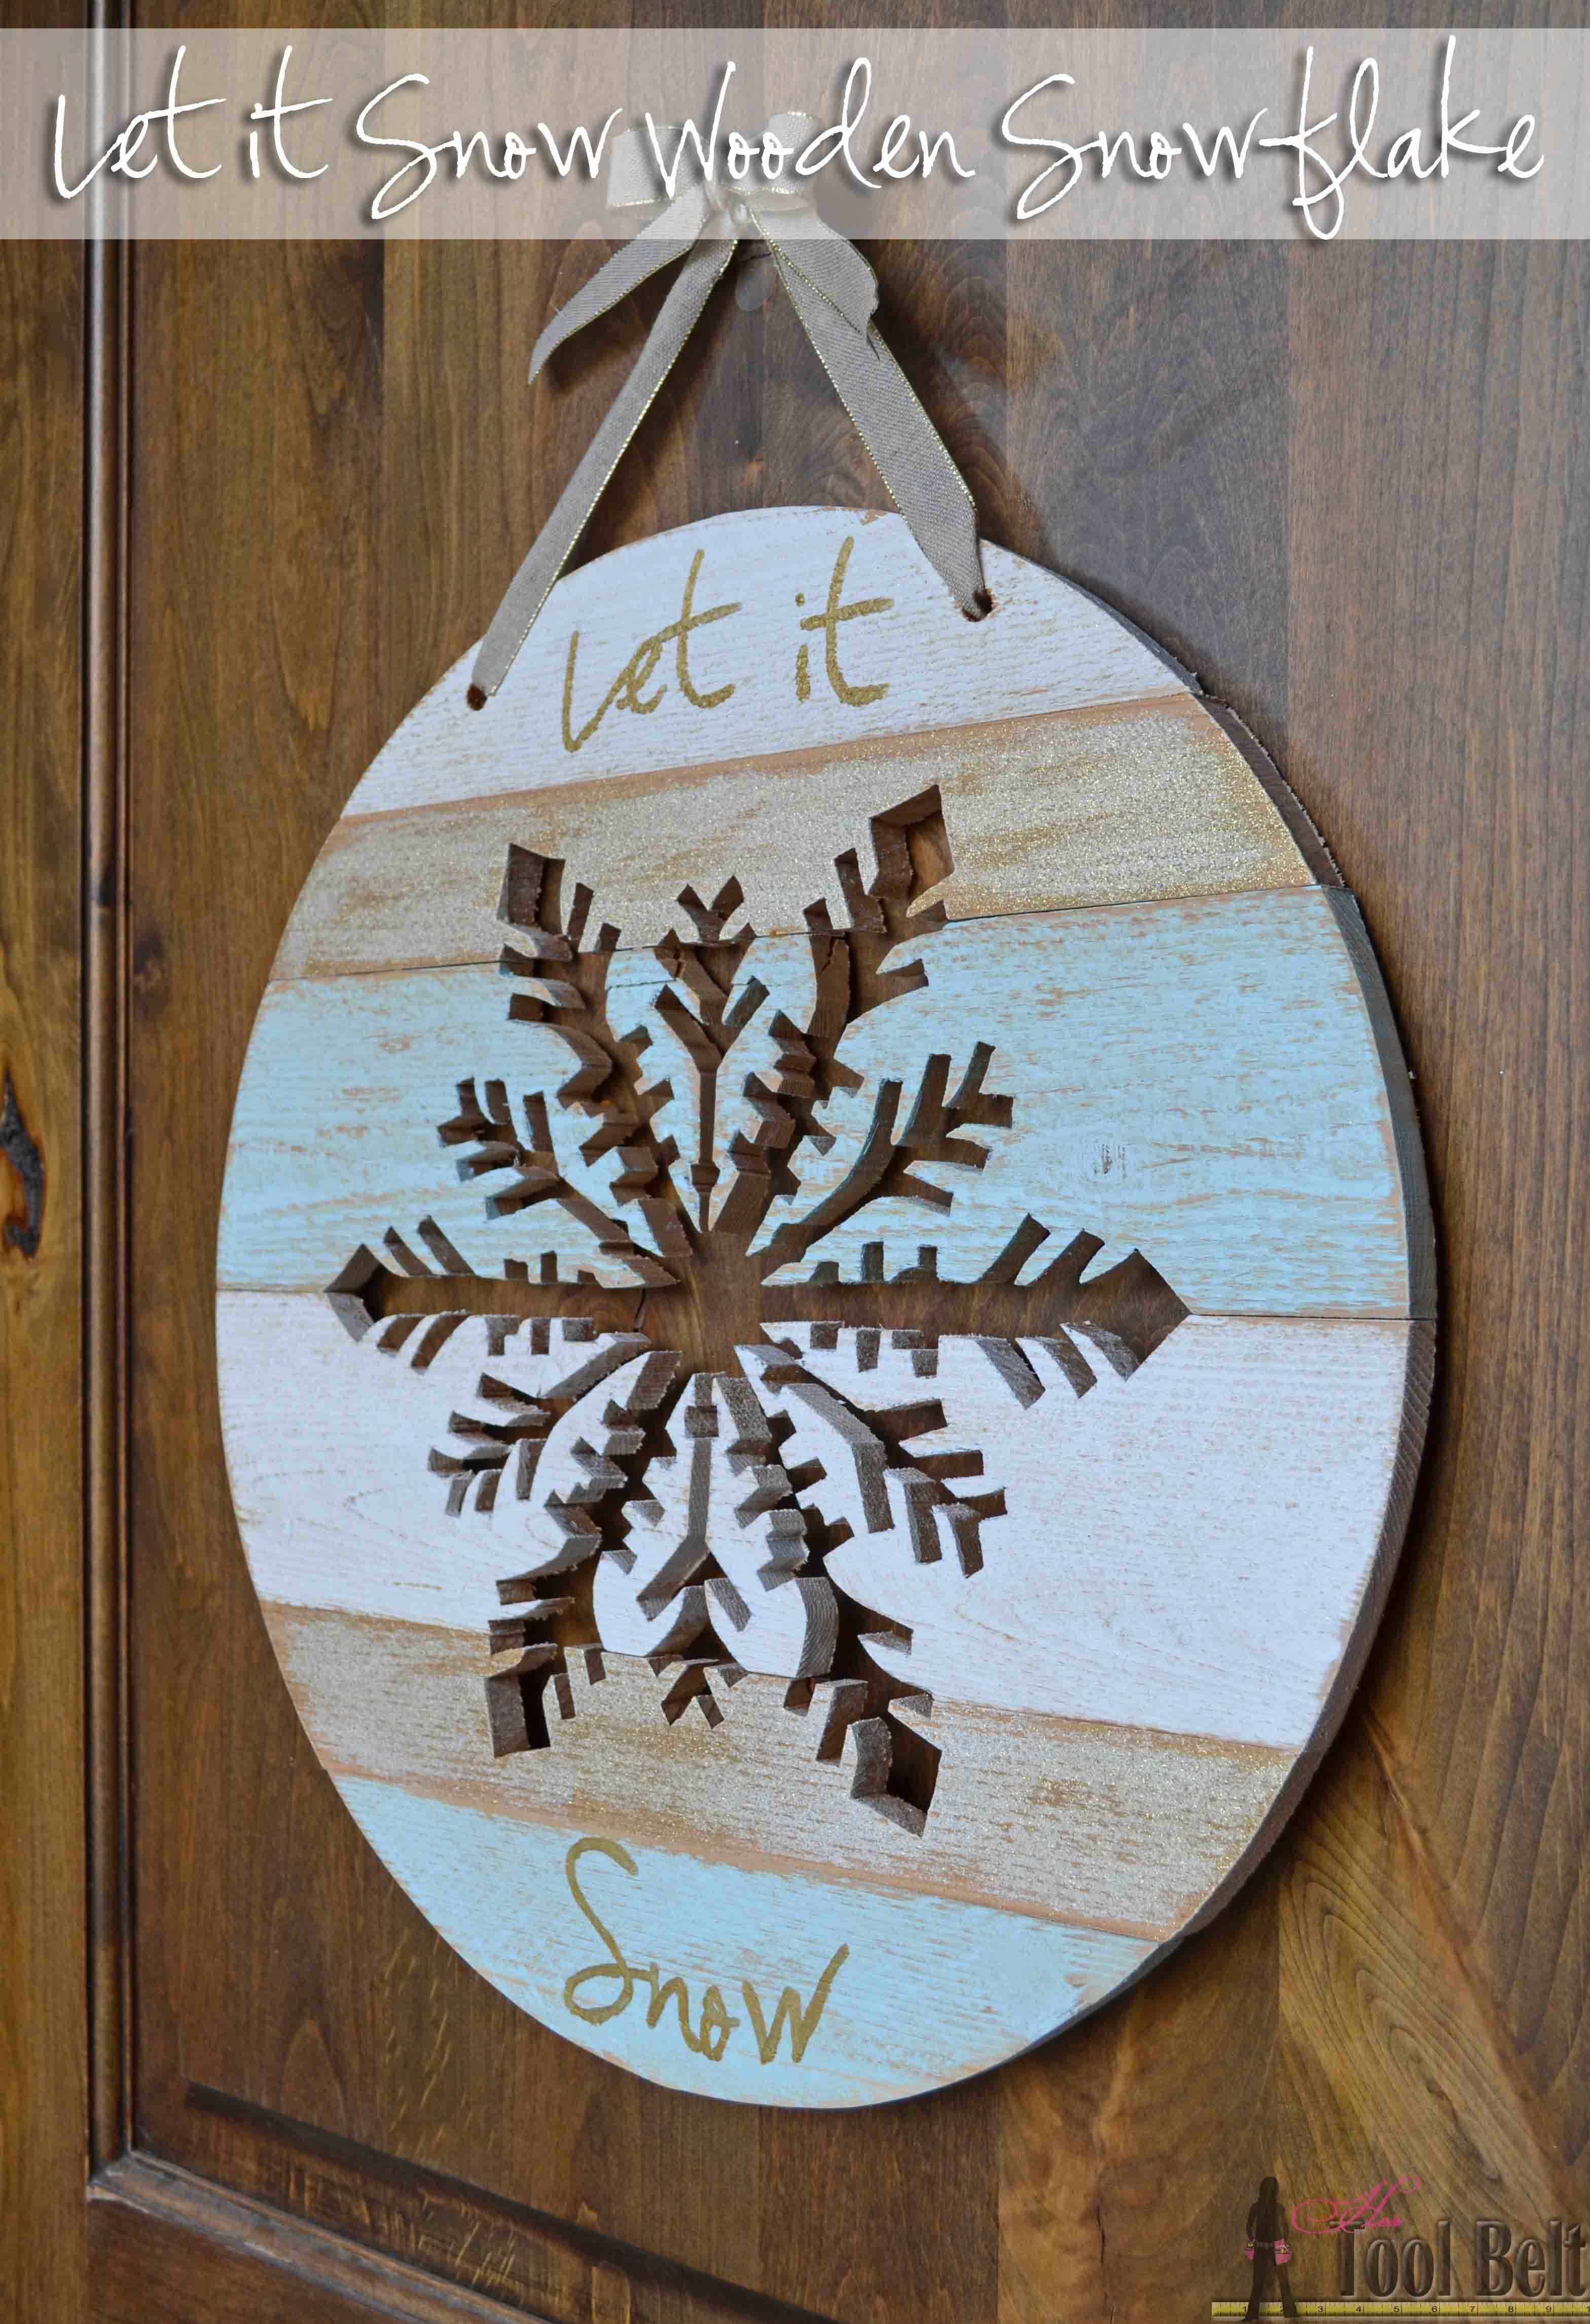 Let It Snow Wooden Snowflake - Her Tool Belt